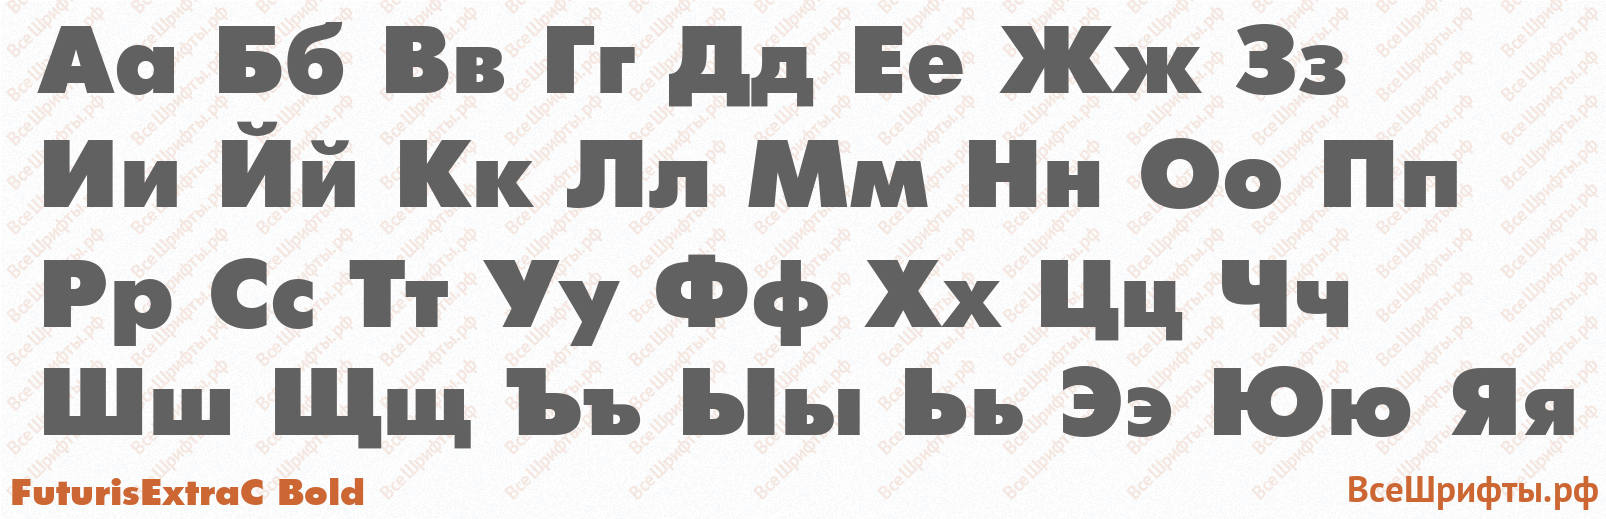 Шрифт FuturisExtraC Bold с русскими буквами